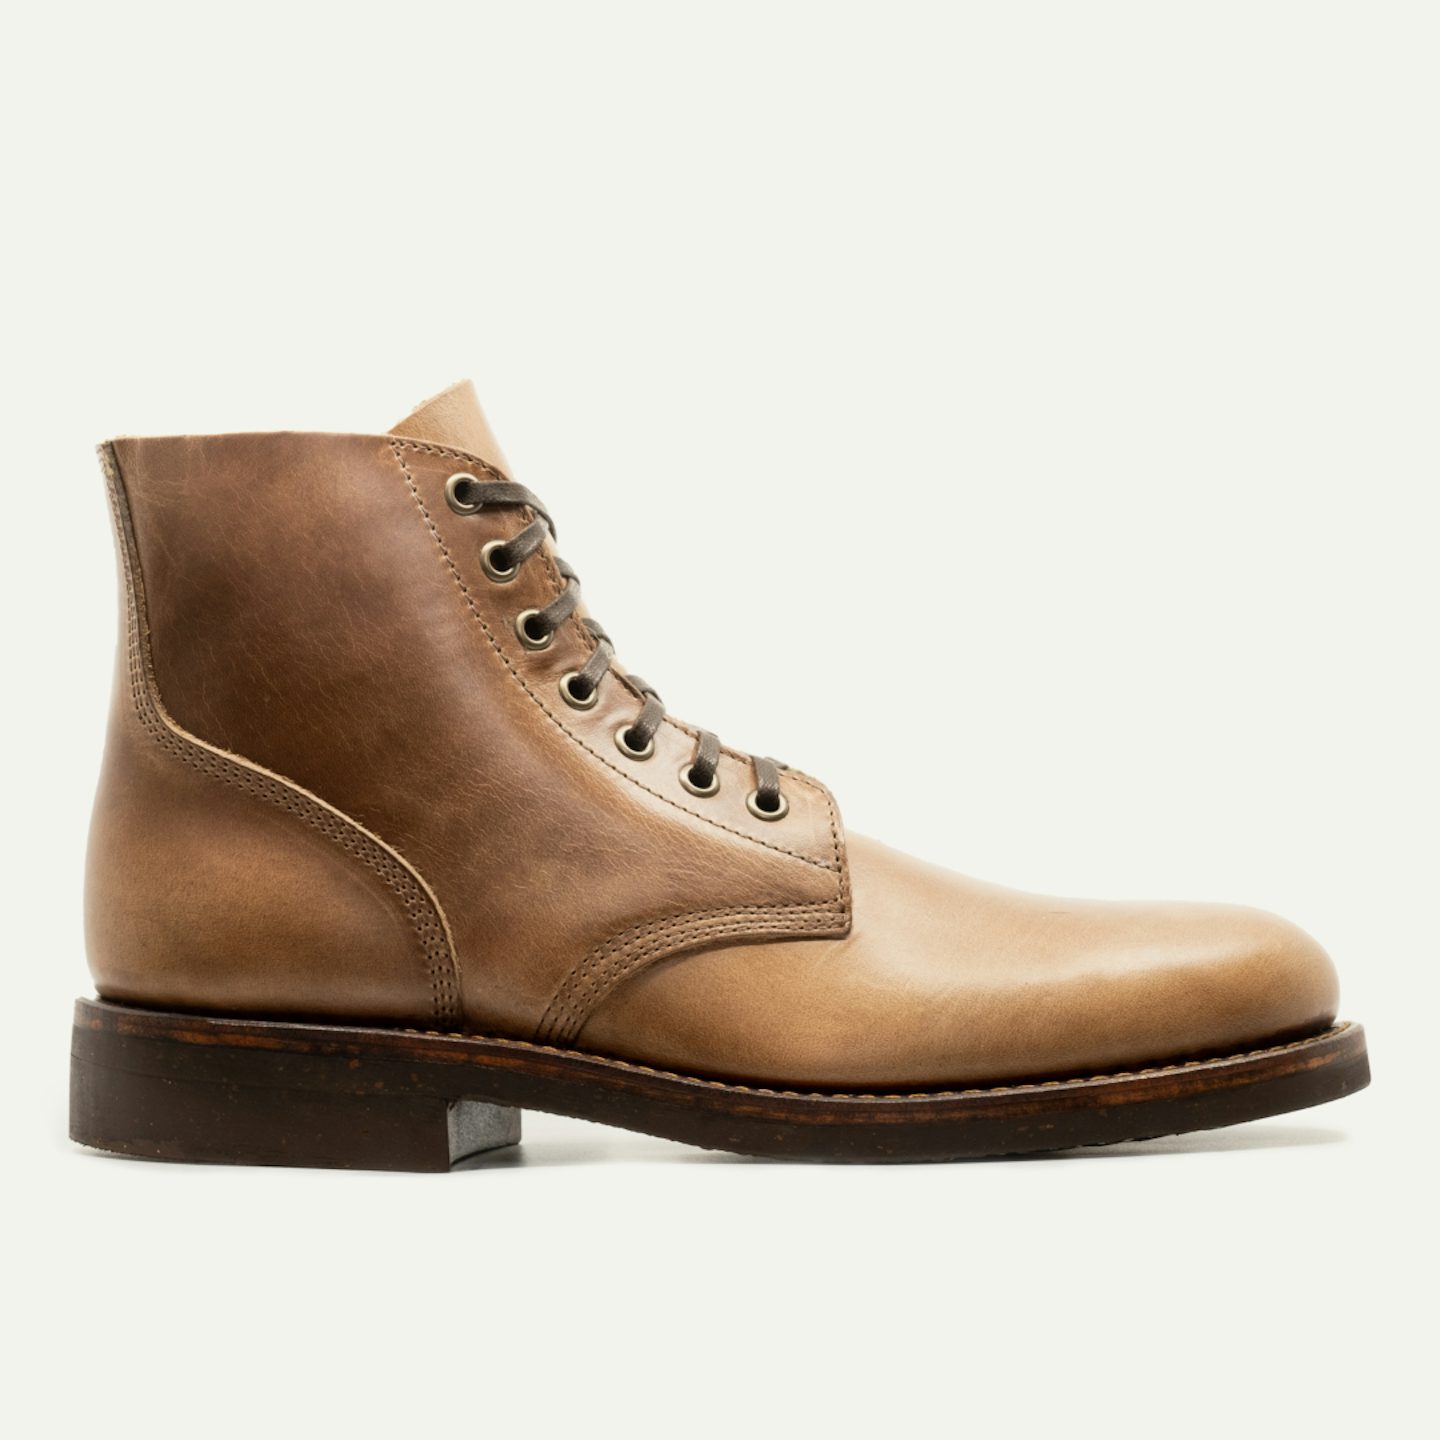 NWT Men's Size 8 - Louis Vuitton Tan Box Leather Chelsea Boots.